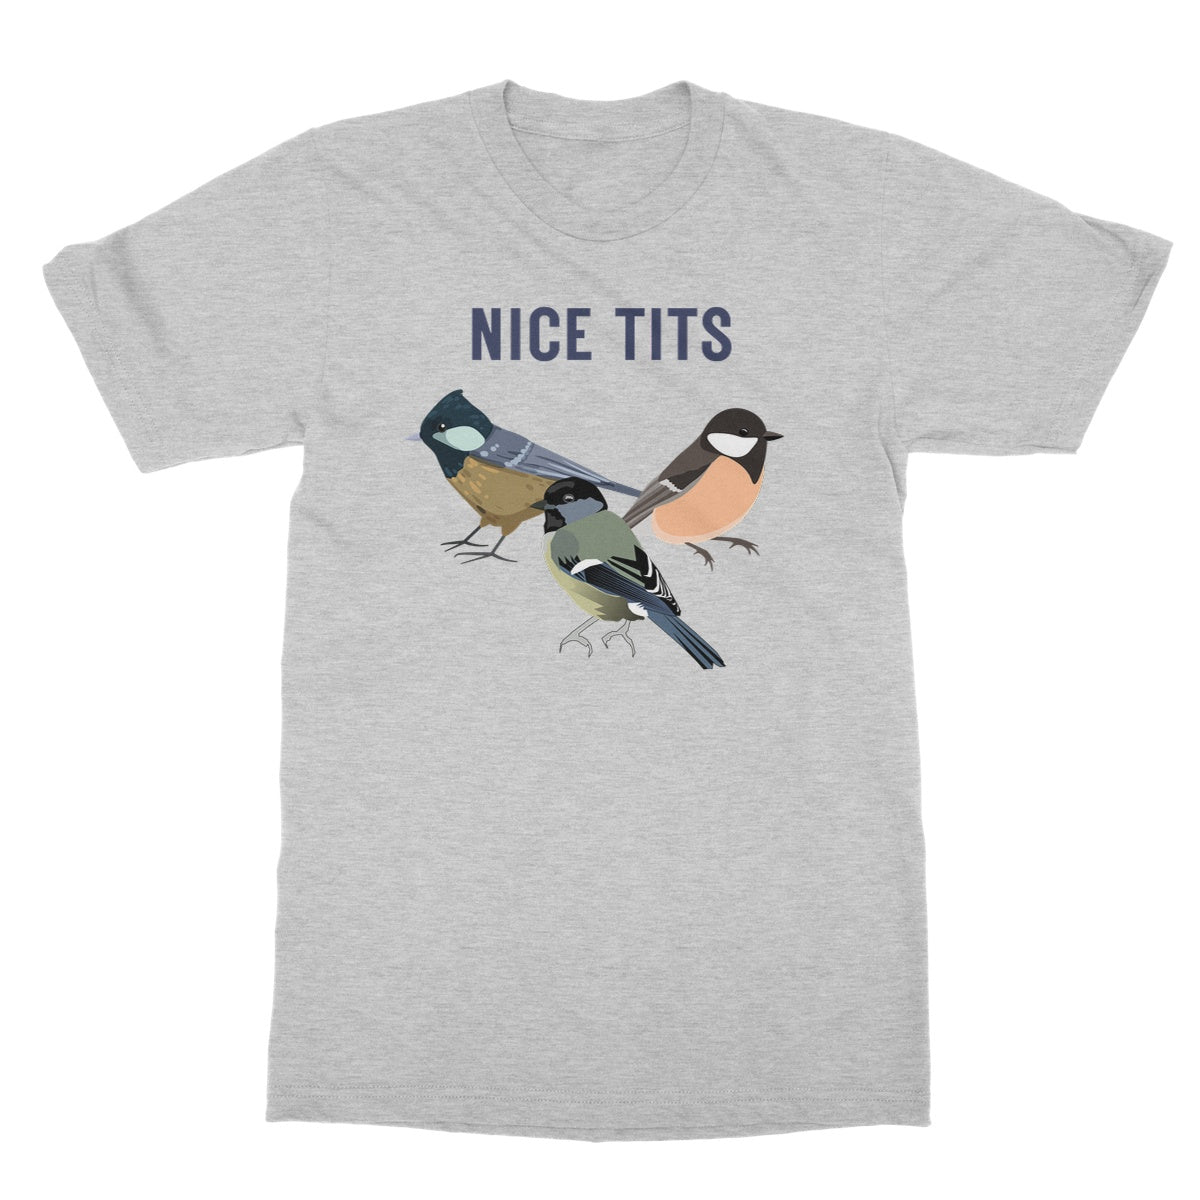 nice tits t shirt grey